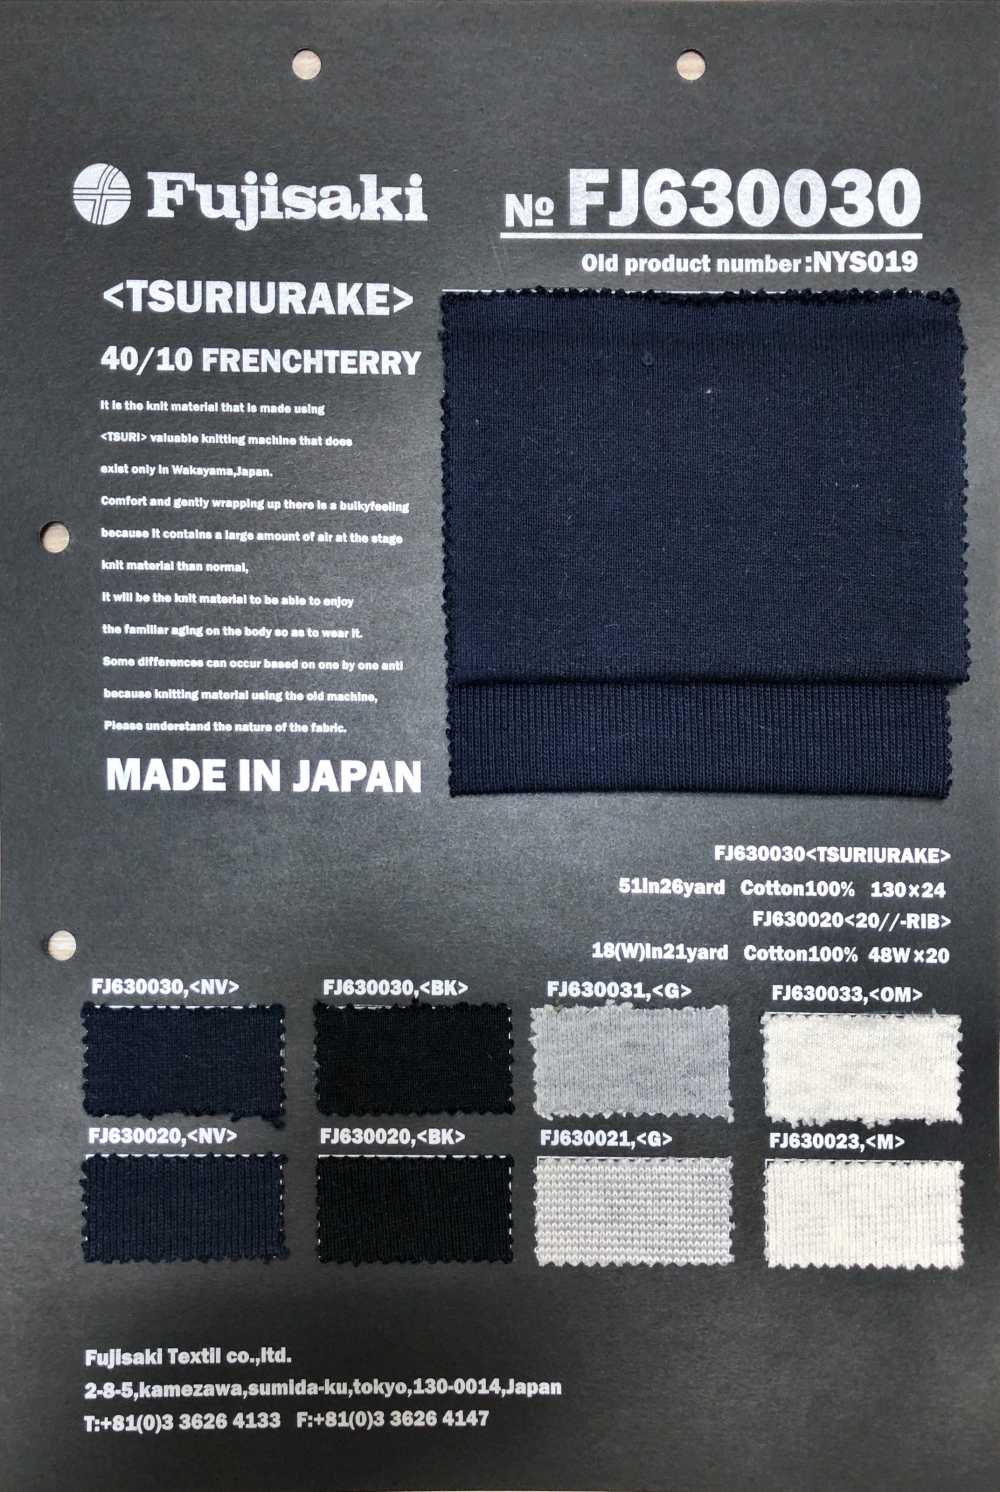 FJ630030 Fleece And Sew Textile[Textile / Fabric] Fujisaki Textile